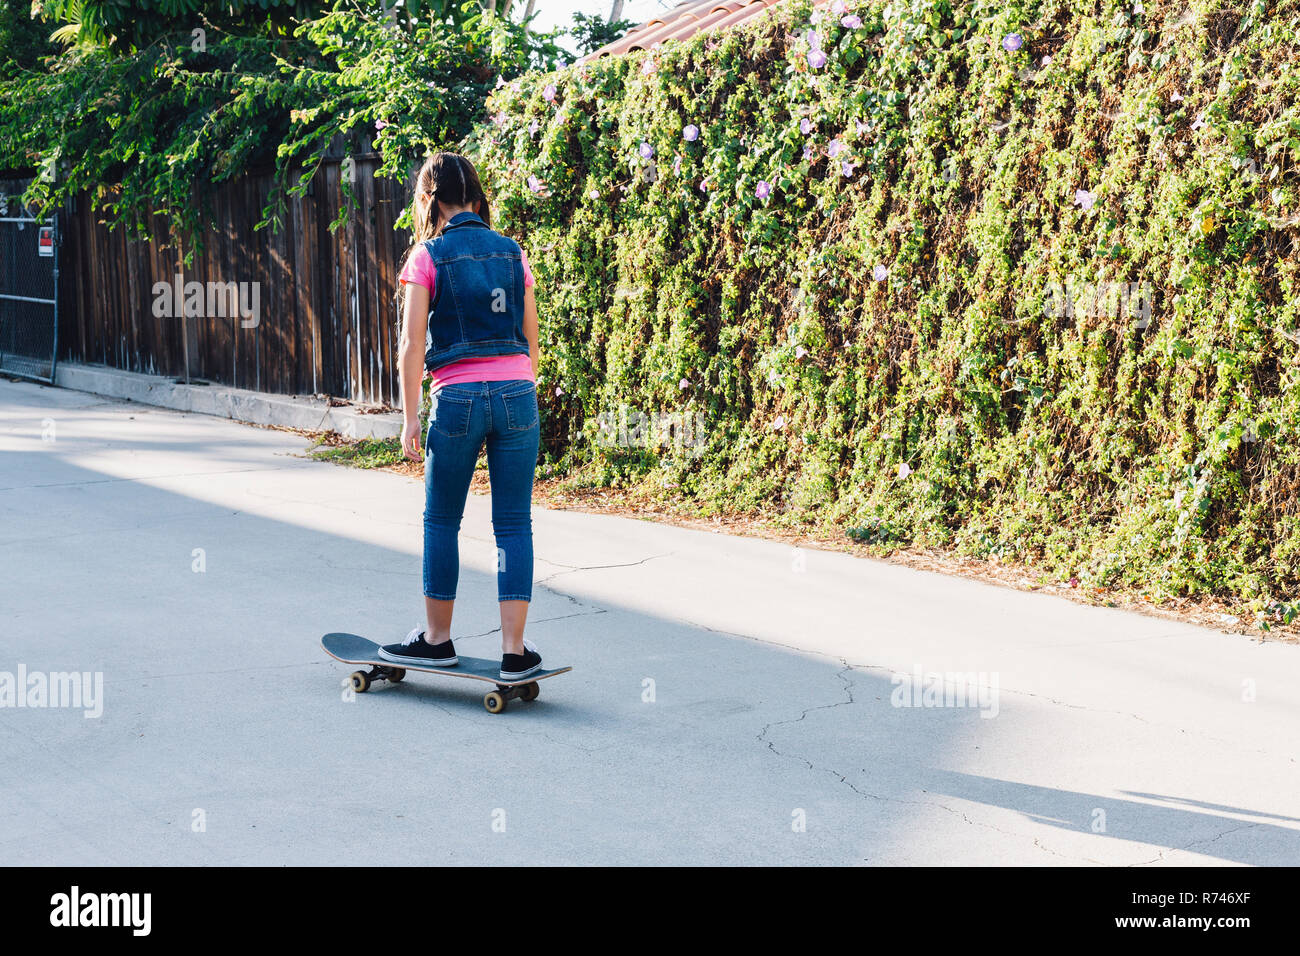 Girl on skateboard Stock Photo